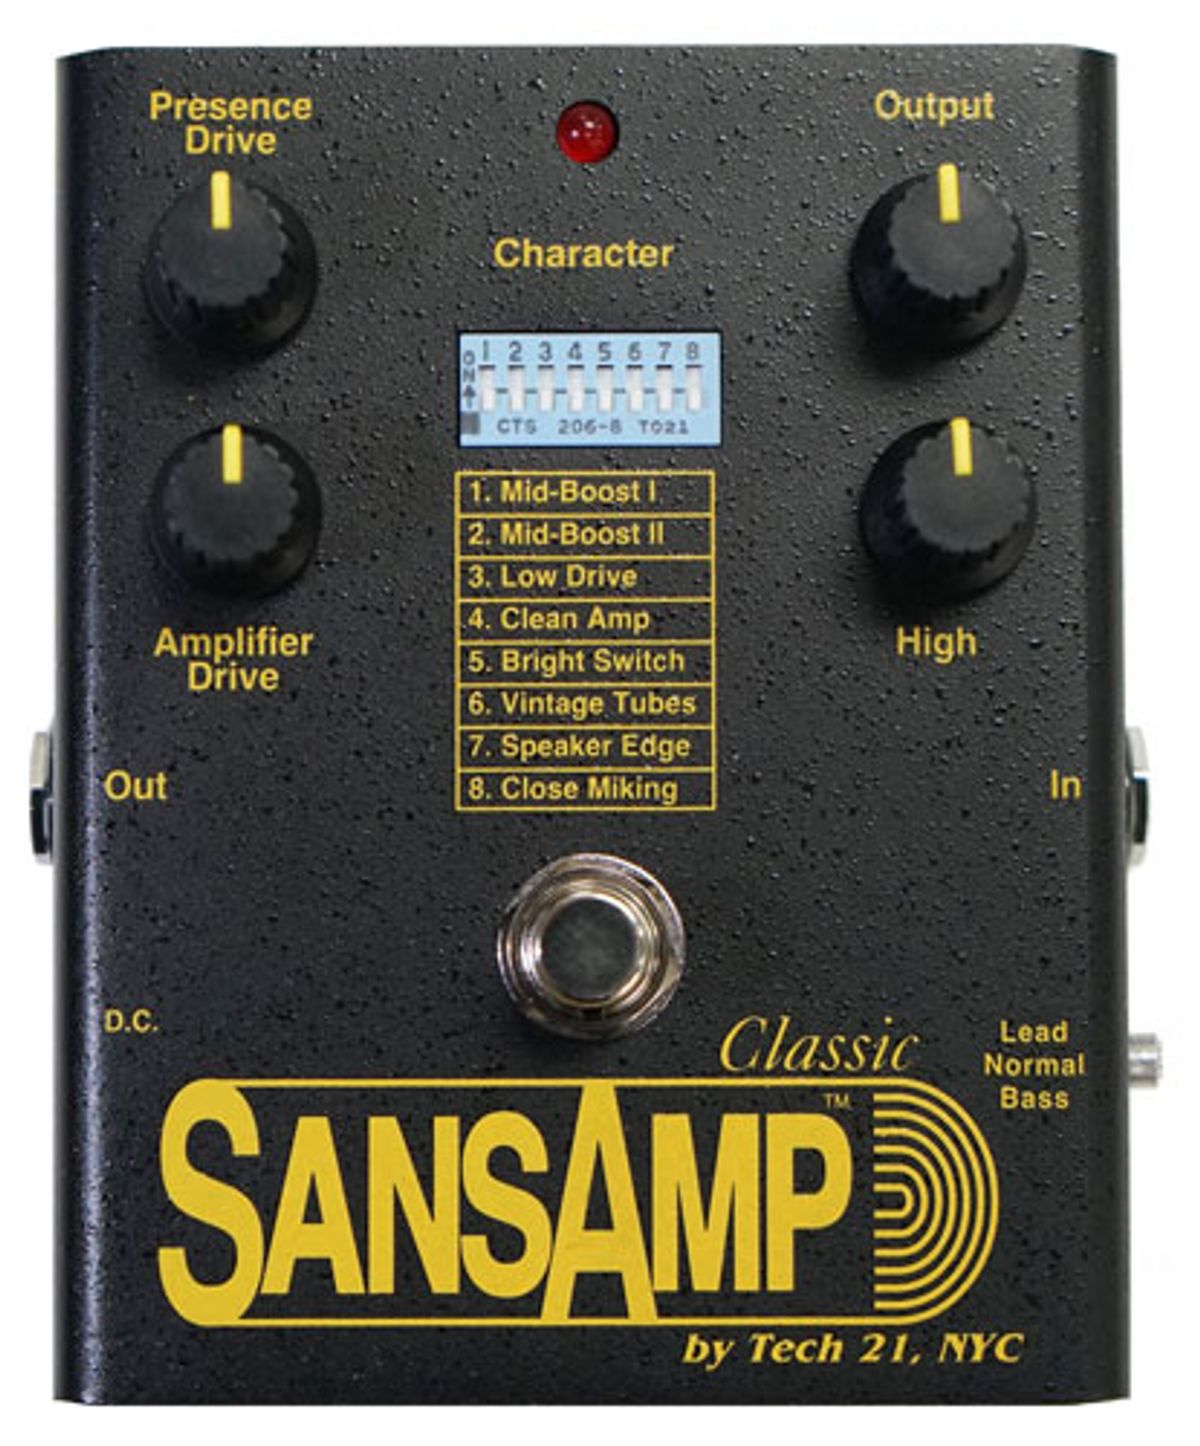 Tech 21 Reissues the SansAmp Classic